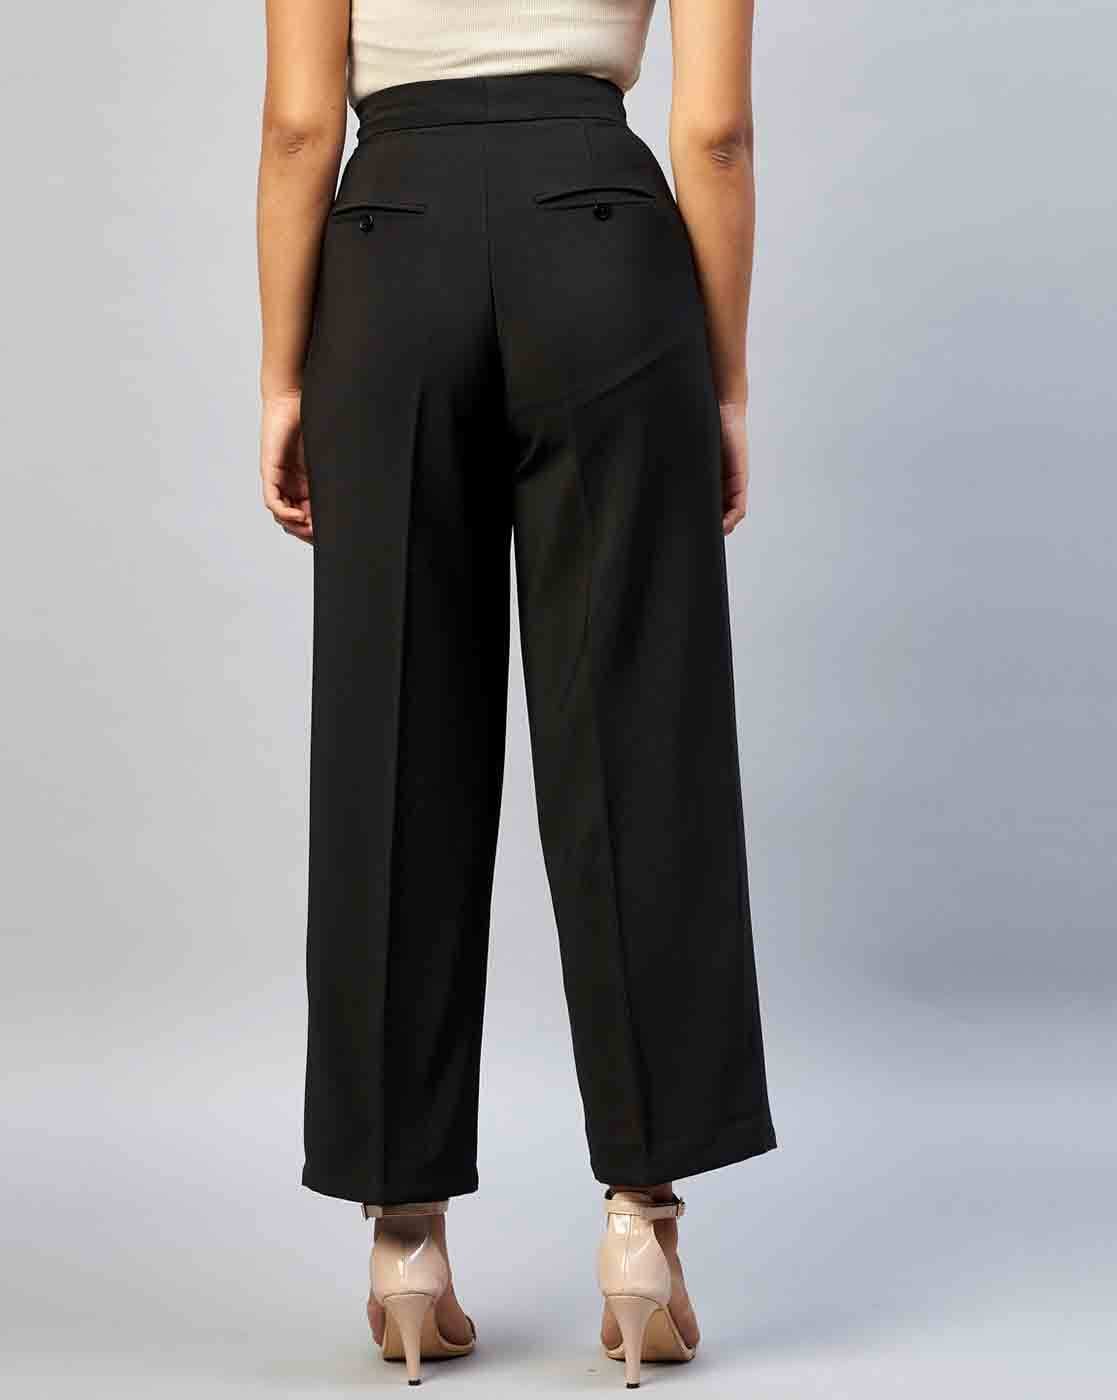 Stretch thin black pants pencil pants high waist black leggings women |  Shopee Philippines